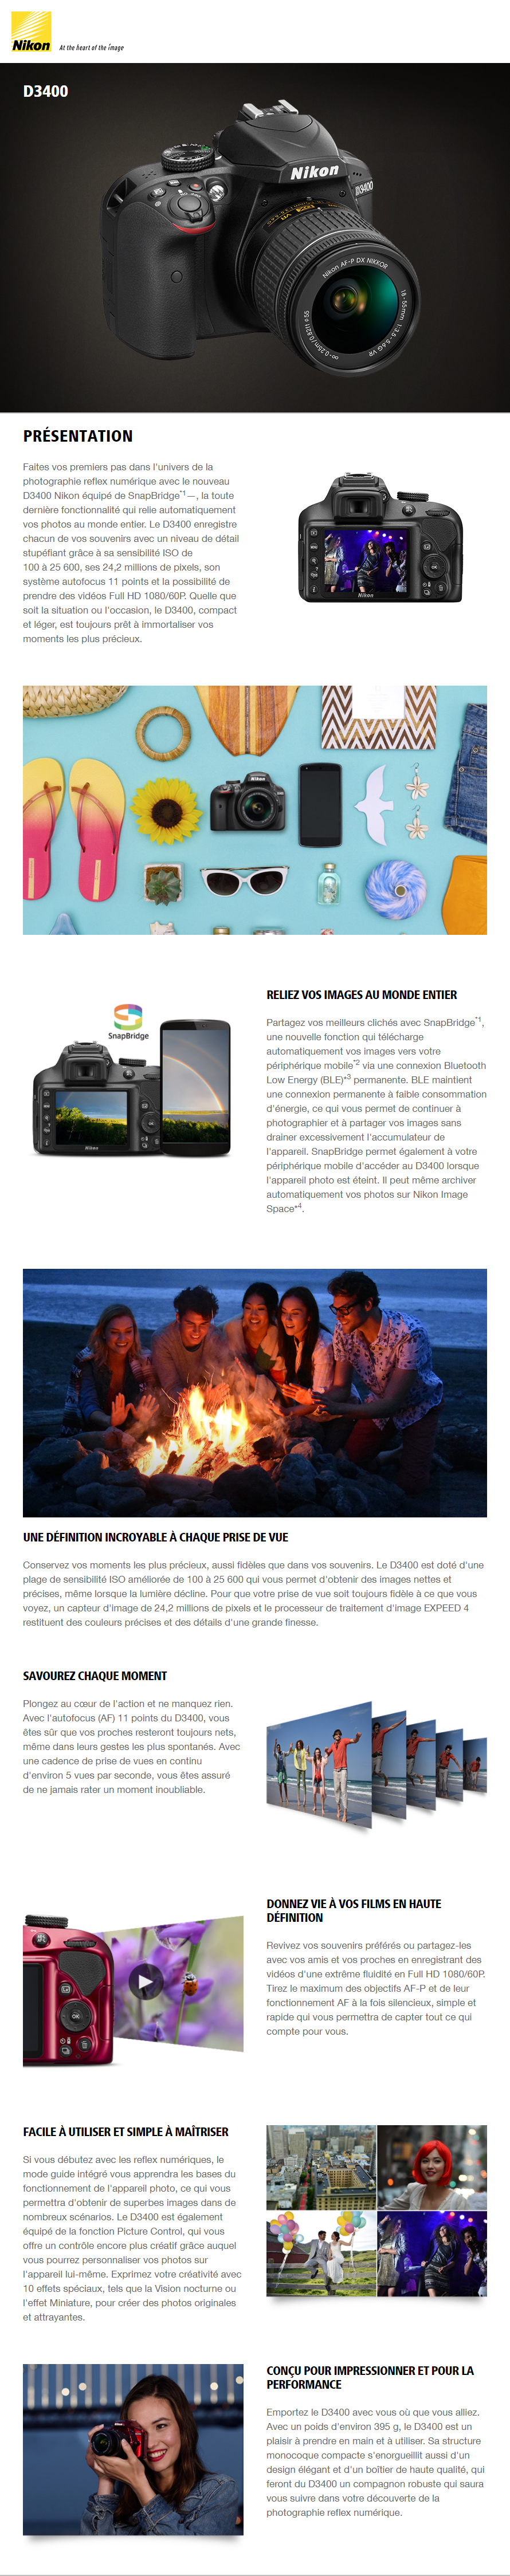 Acheter Reflex Nikon D3400 avec AF-P DX 18-55mm f/3.5-5.6G VR Maroc